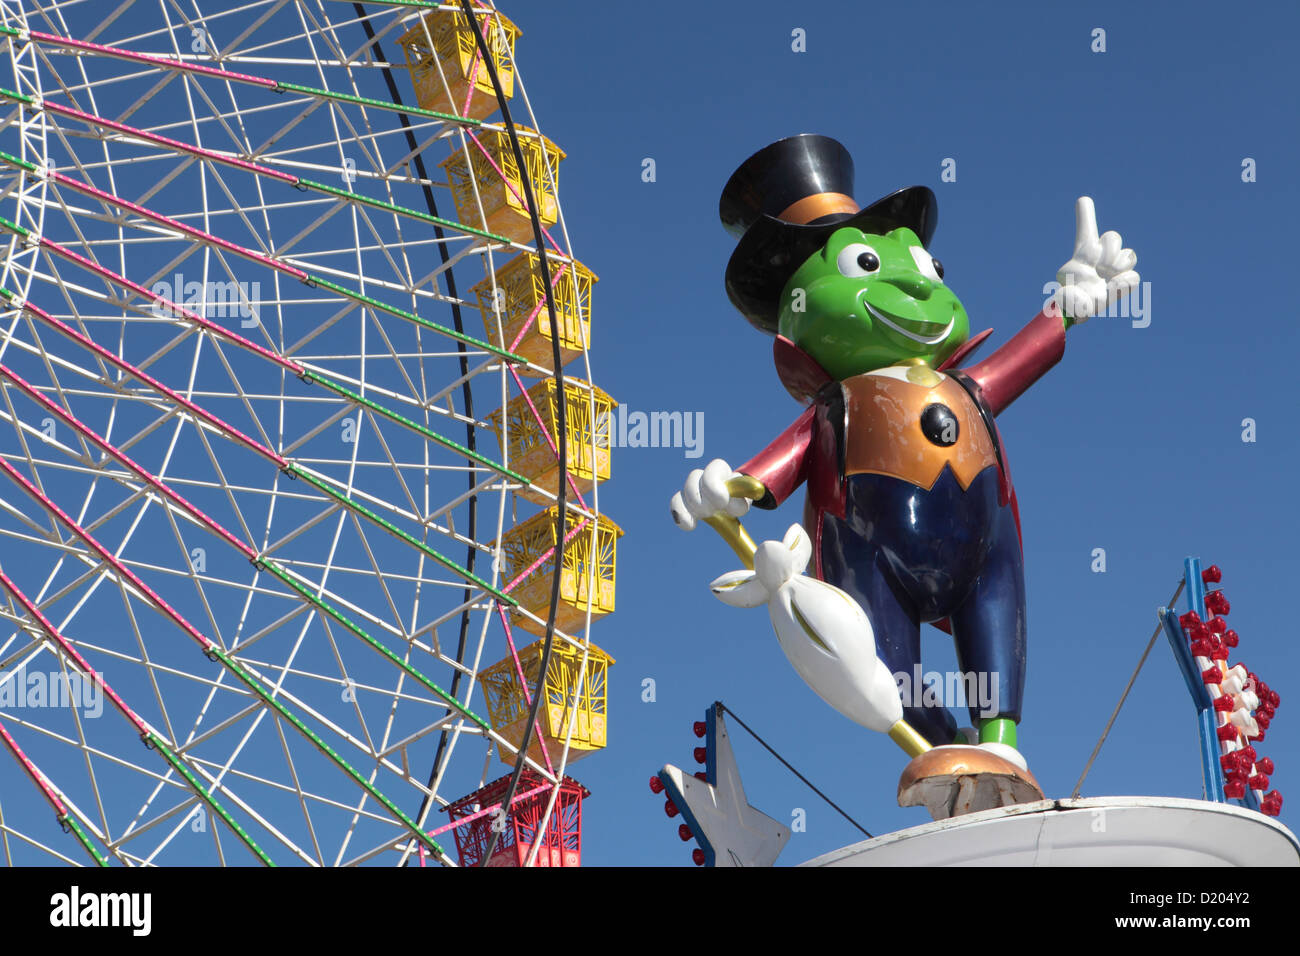 Jiminy Cricket, statue figure in front of Ferris Big Wheel at Funfair Fairground, Puerto de la Cruz, Tenerife, Canary Islands Stock Photo